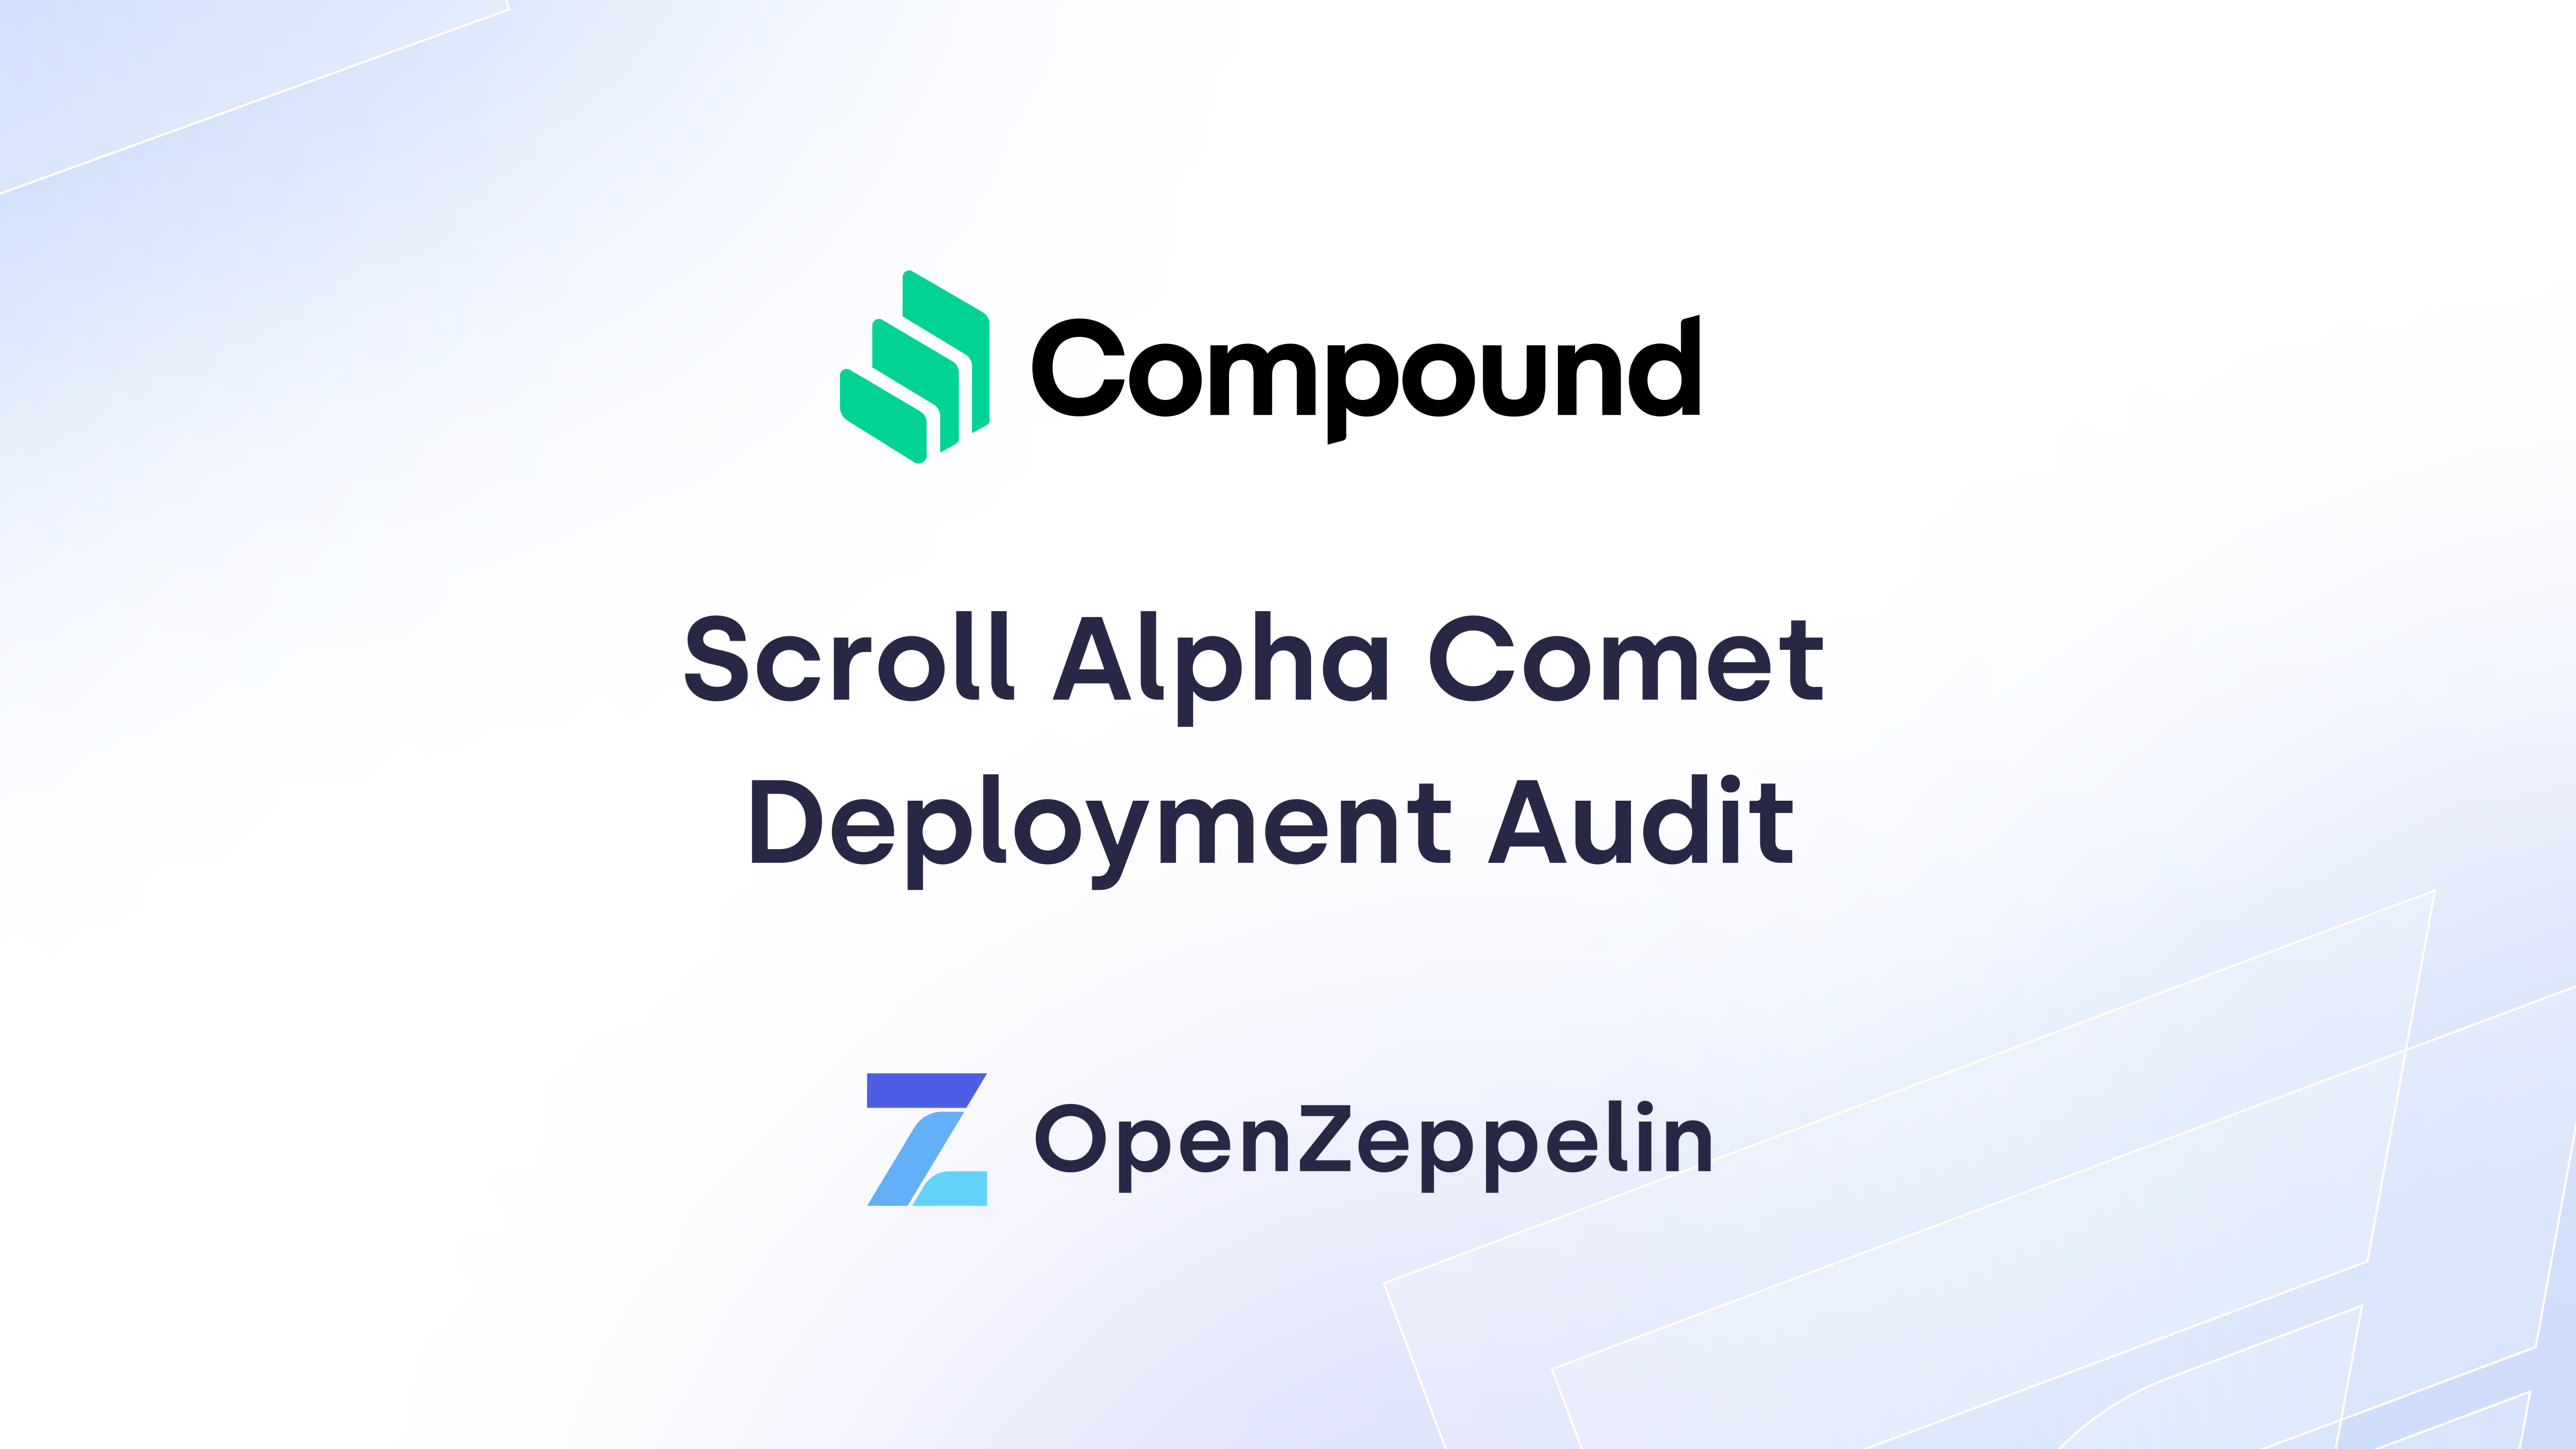 image showing Compound scroll alpha comet deployment audit